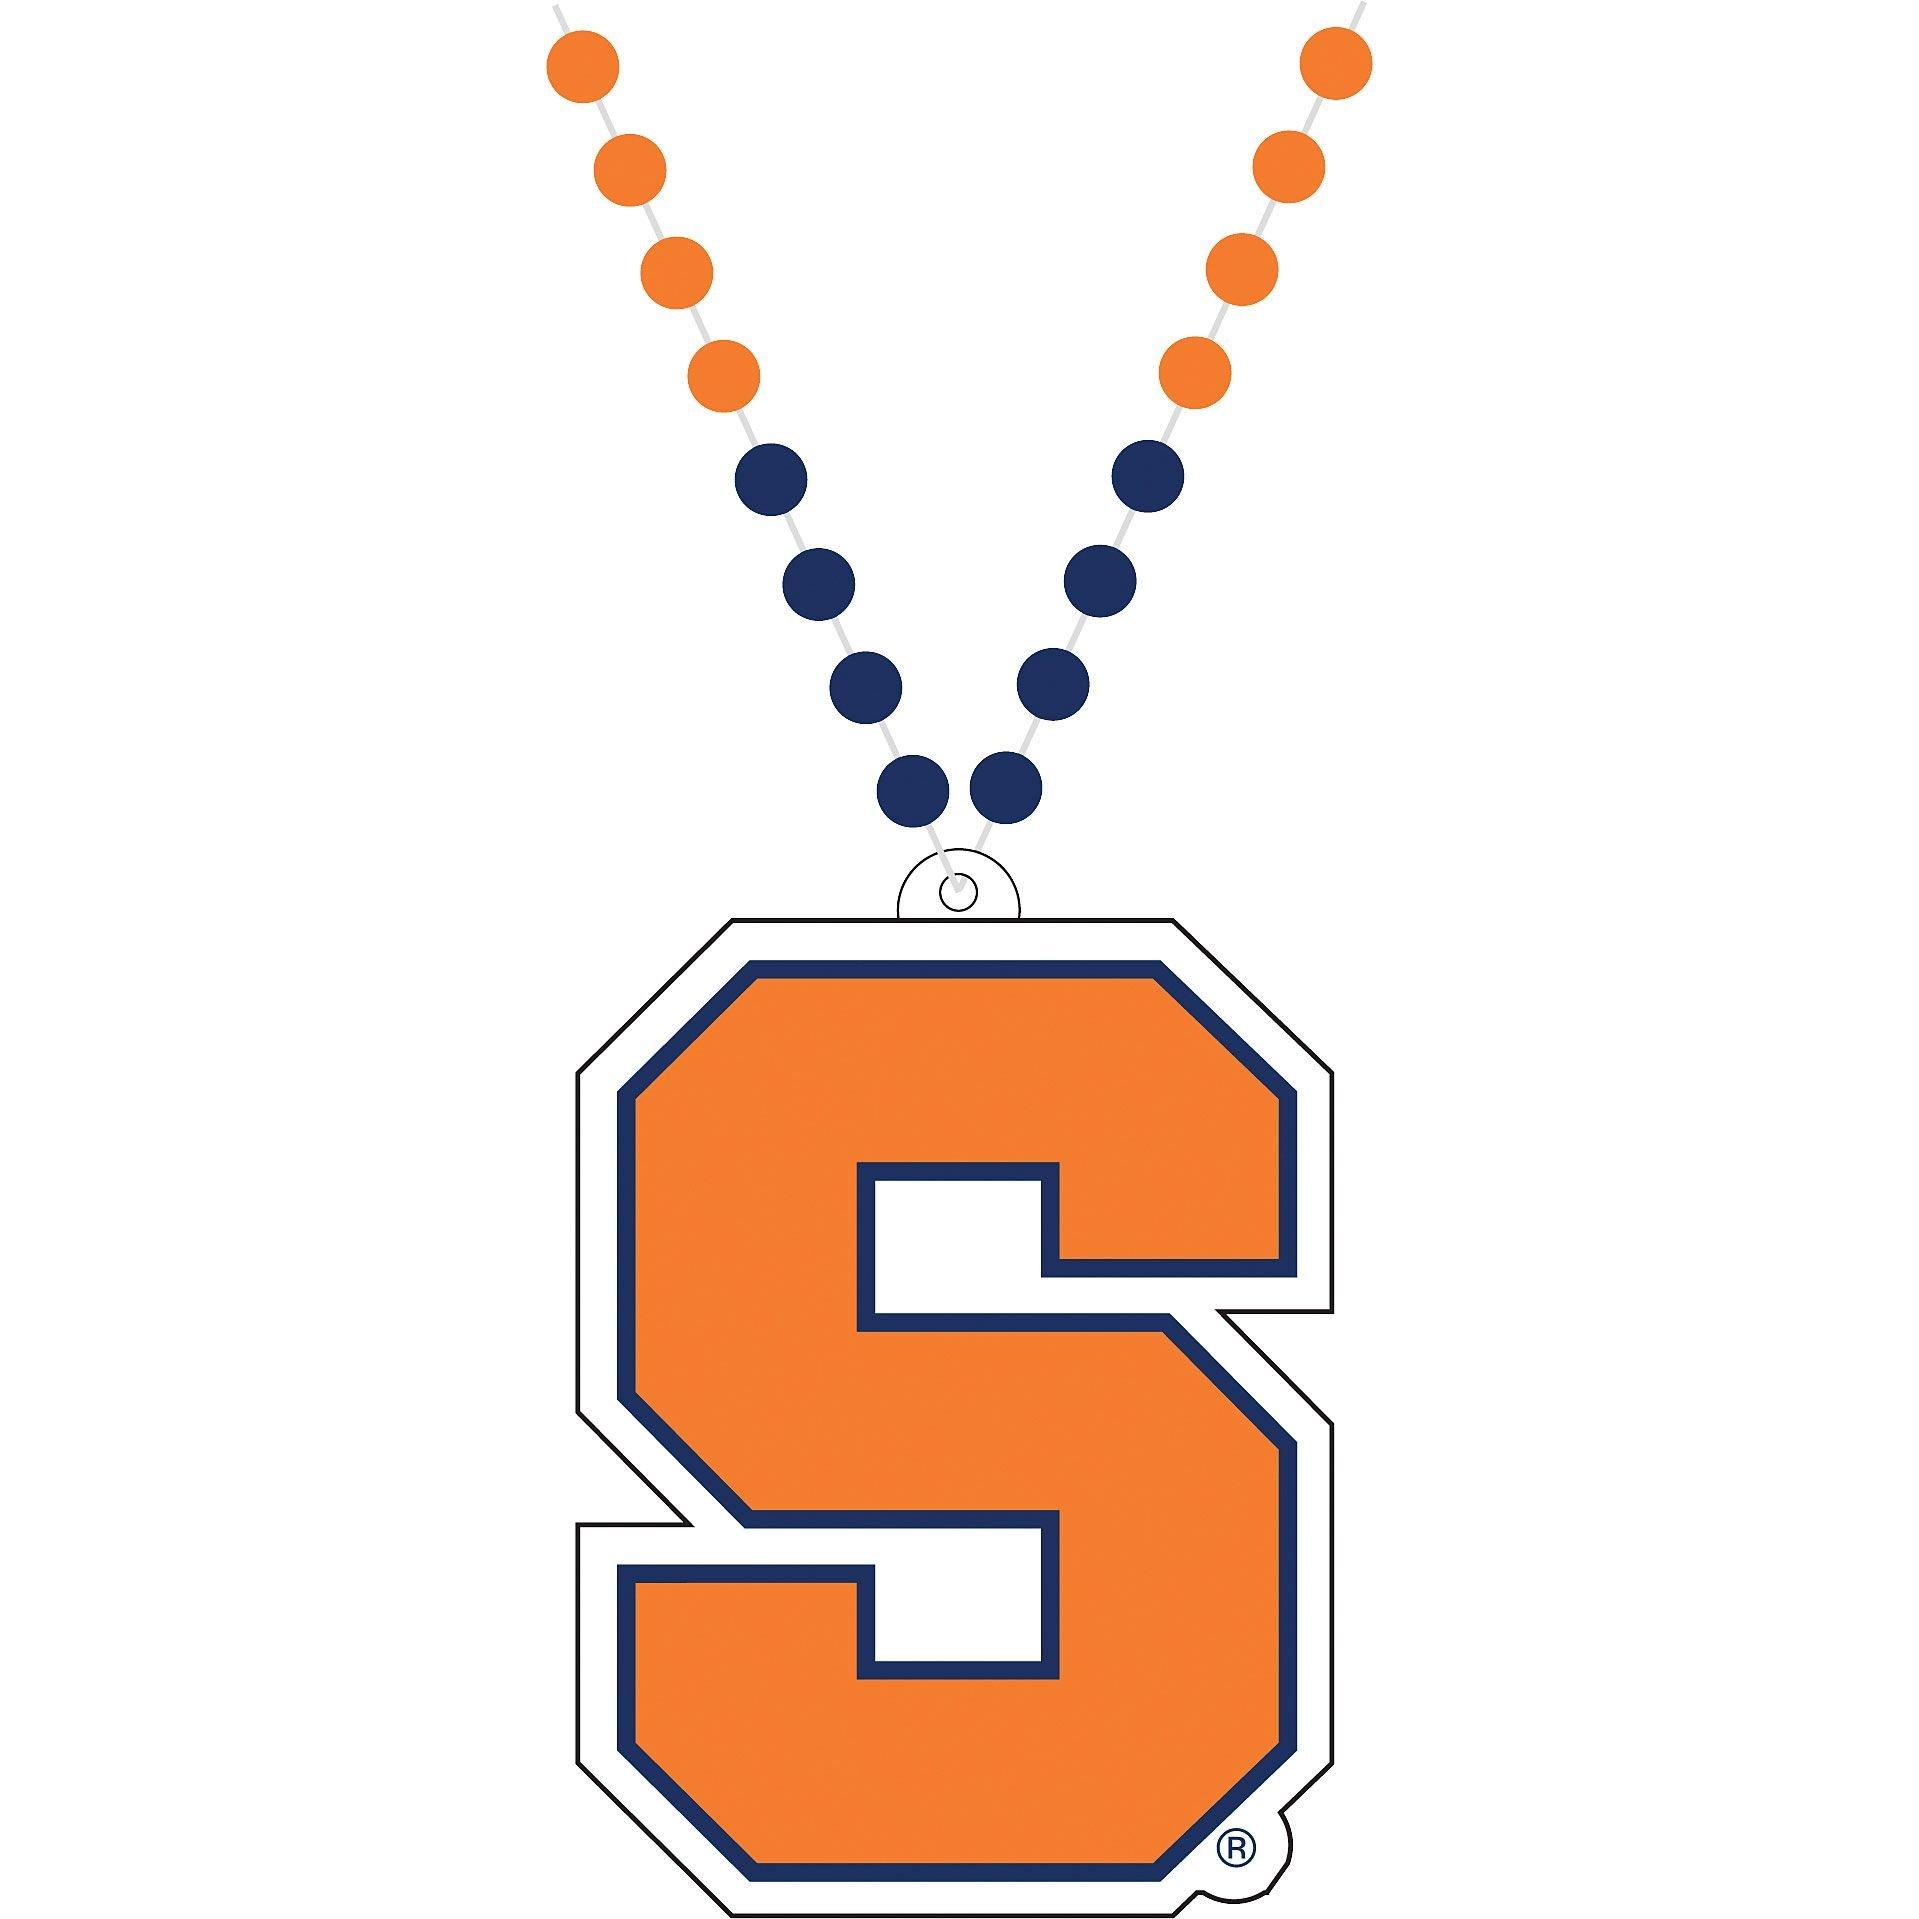 Syracuse Orange Pendant Bead Necklace